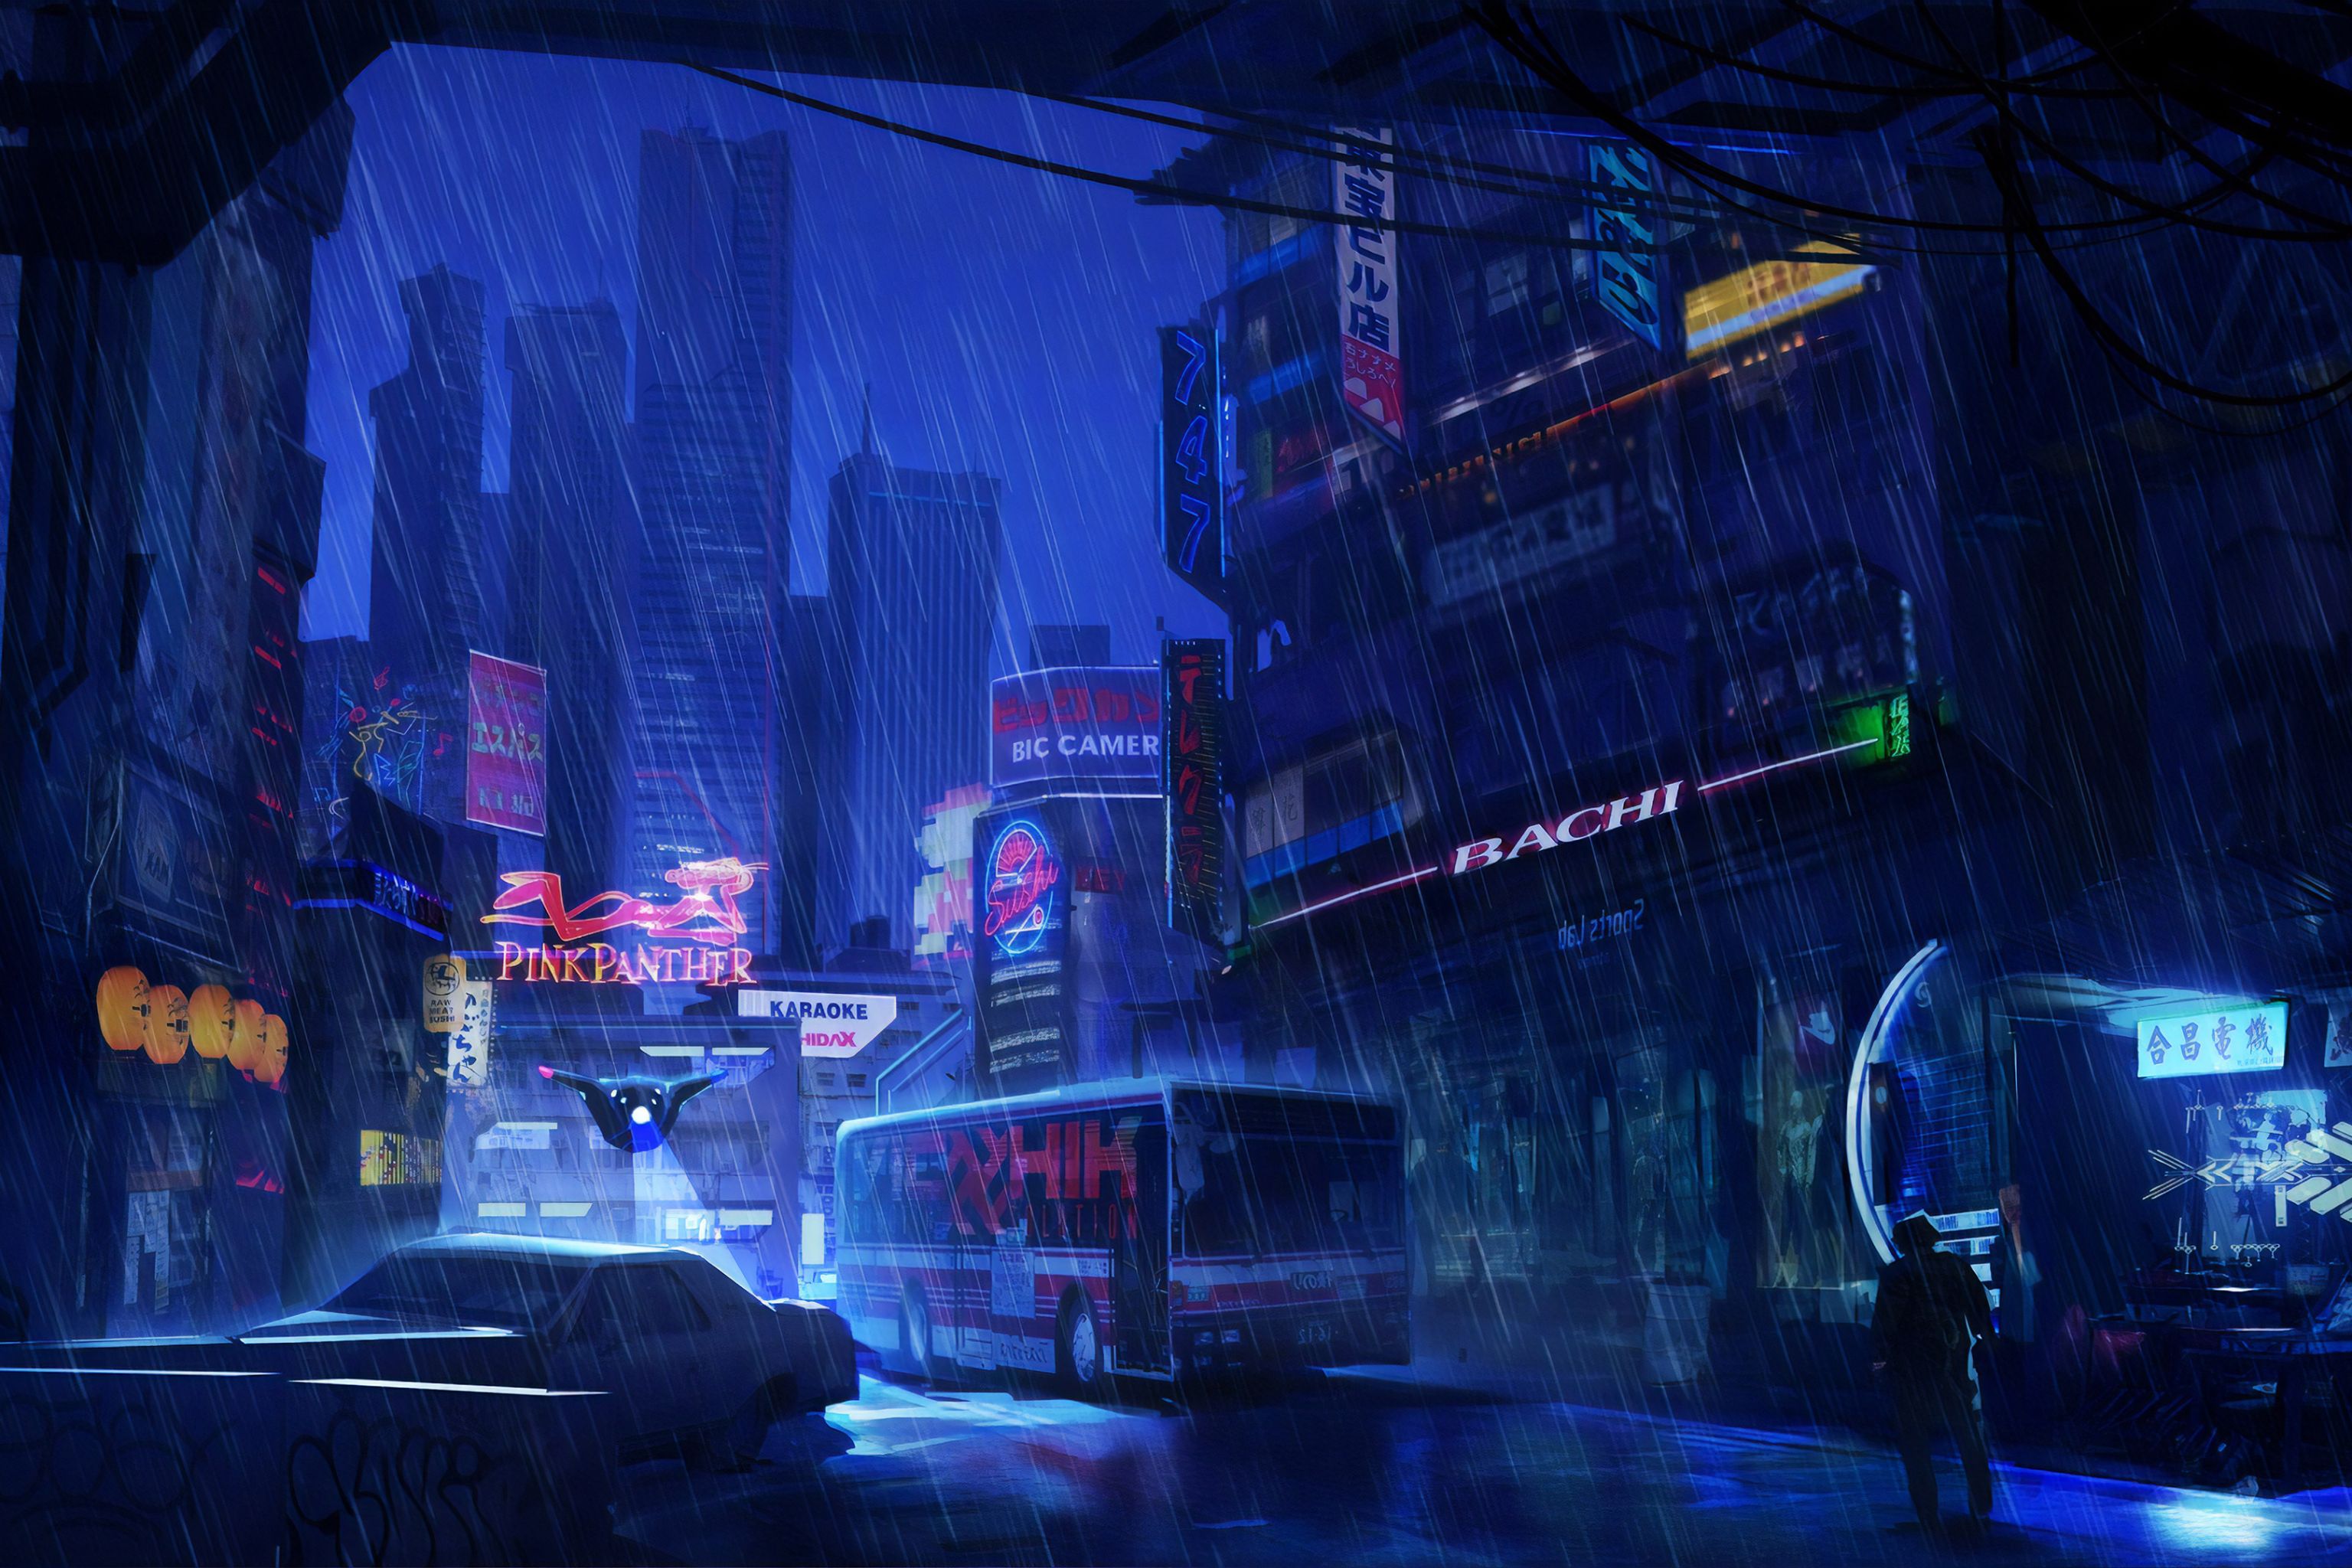 A city street with people walking in the rain - Rain, Cyberpunk